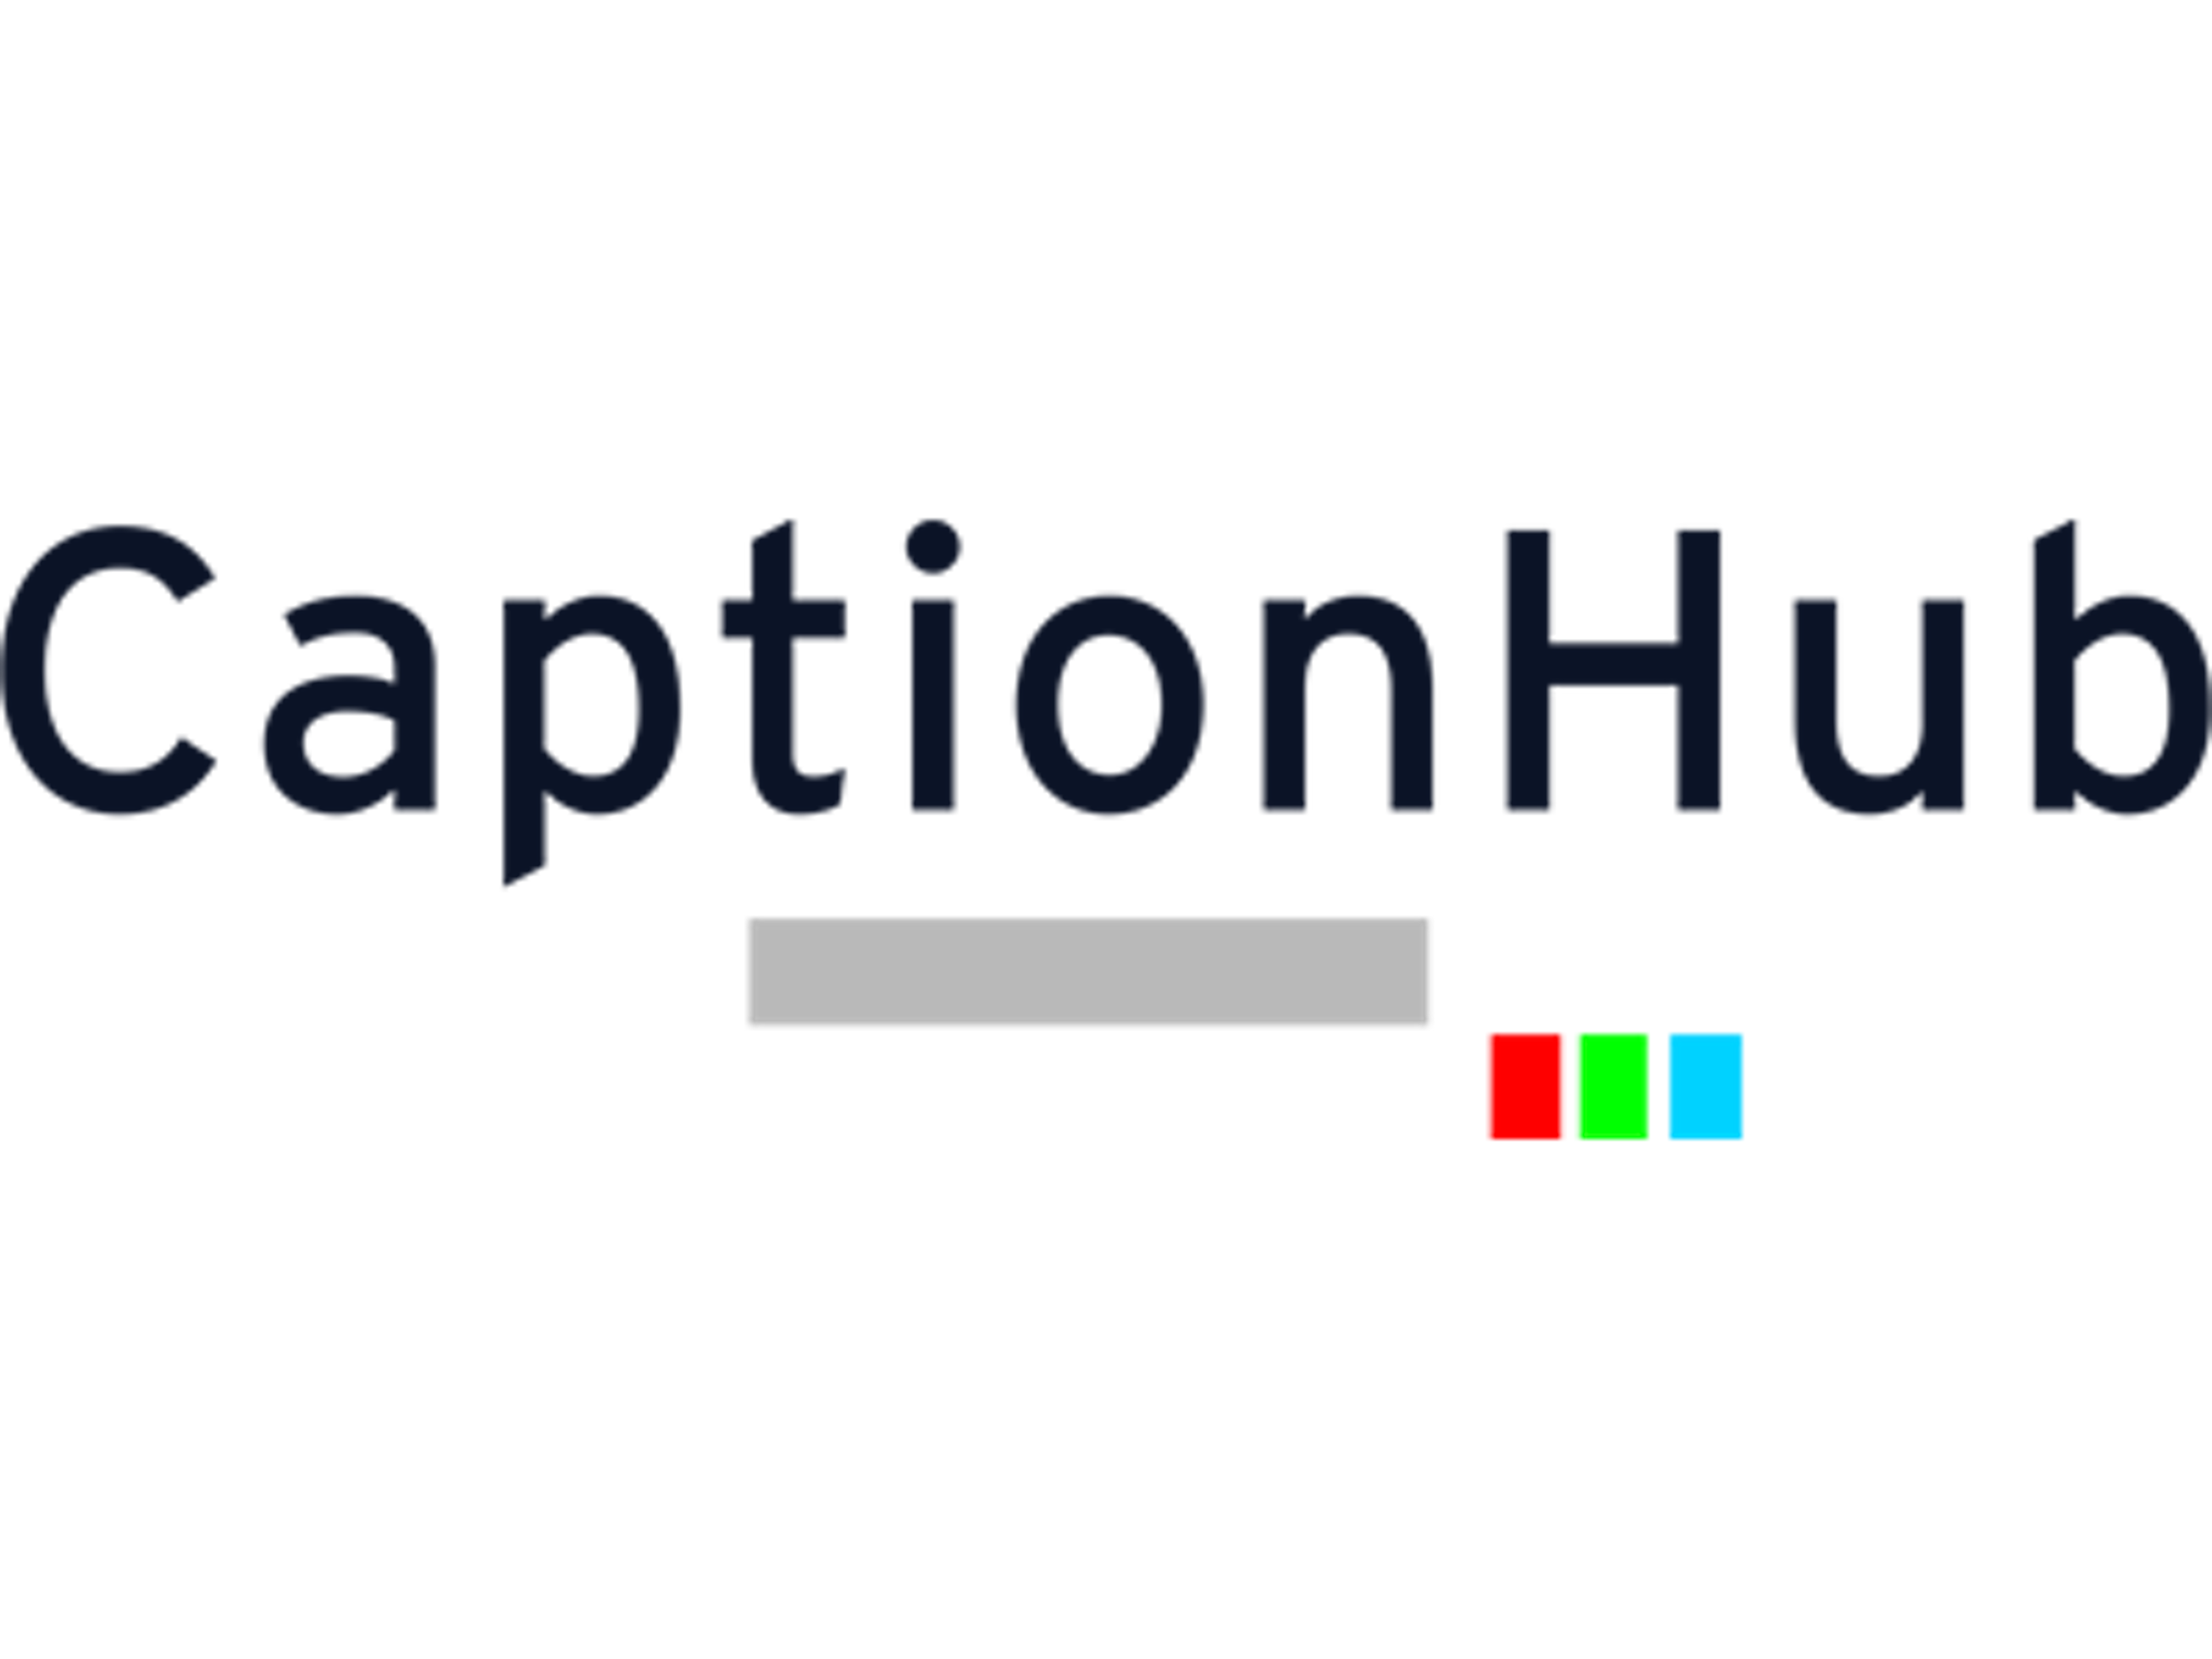 CaptionHub Logo